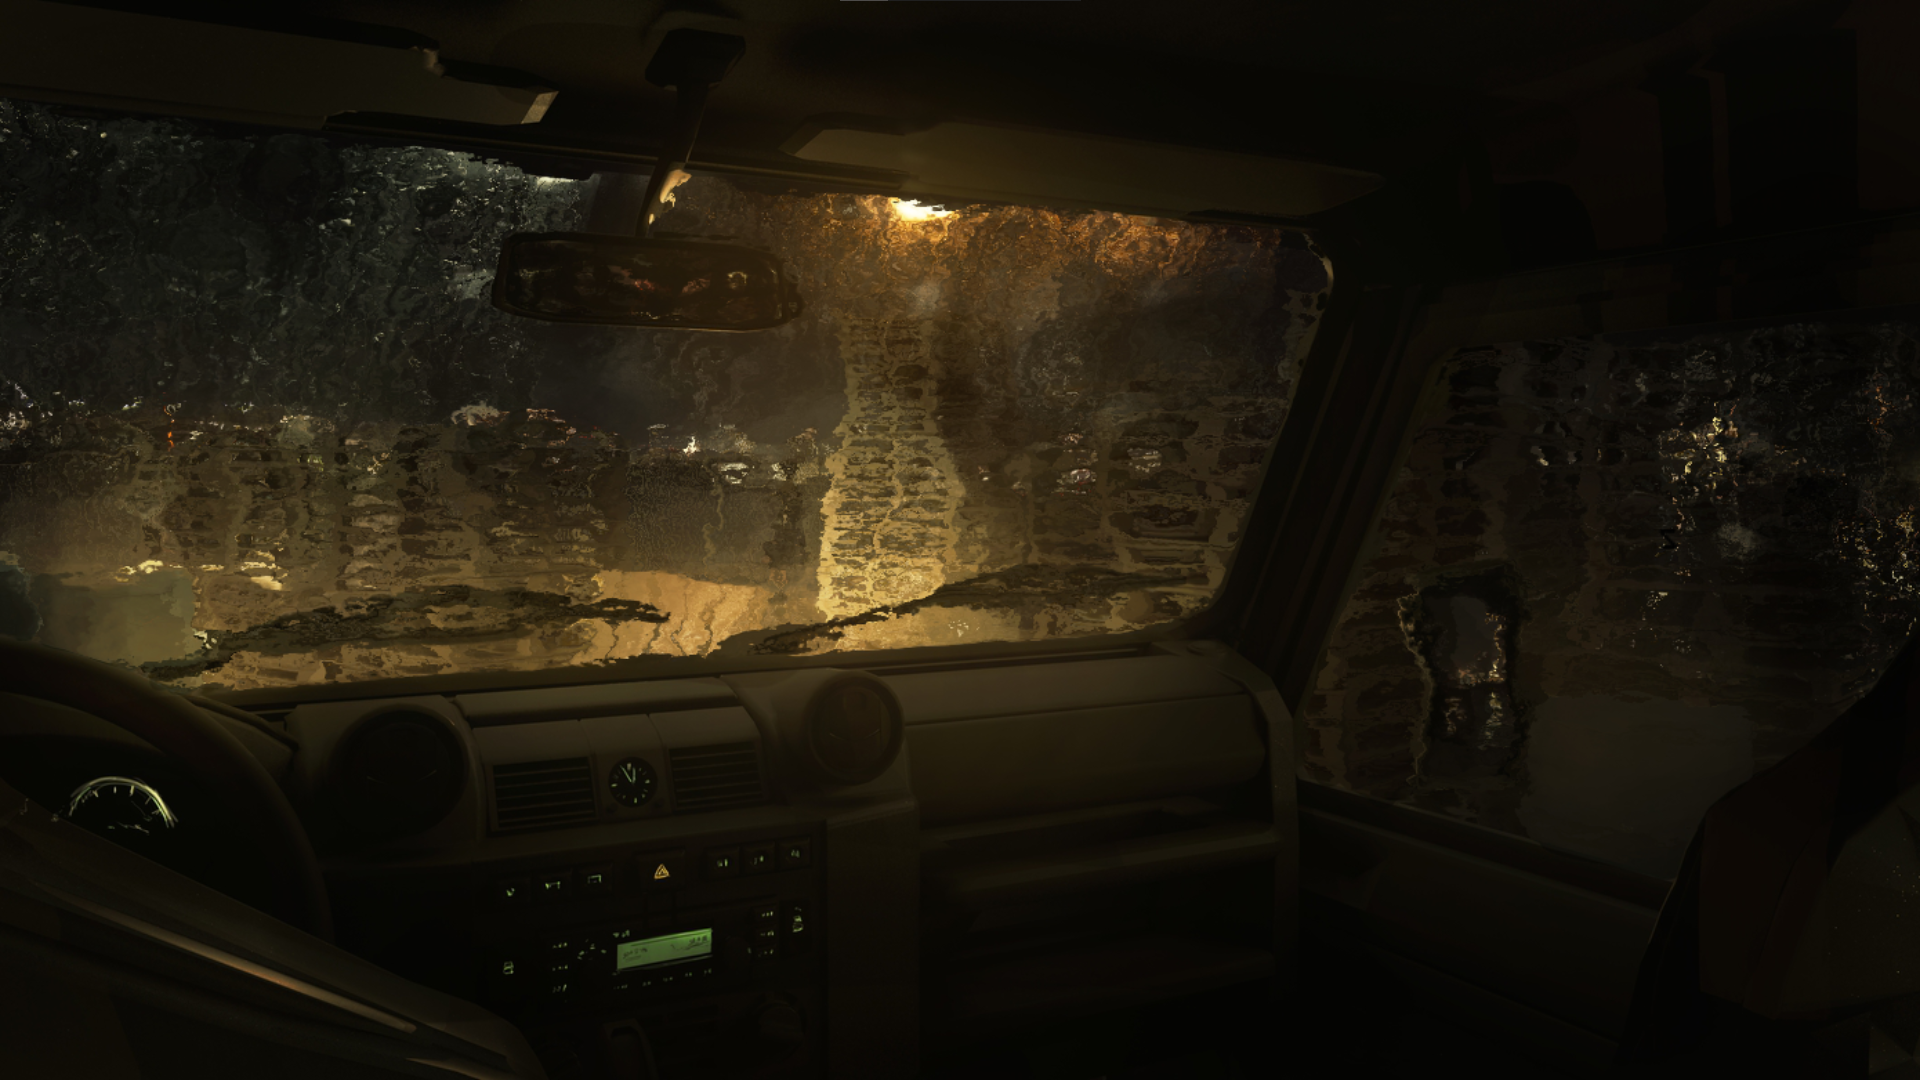 General 1920x1080 car interior night rain radio vehicle rearview mirror window car interior